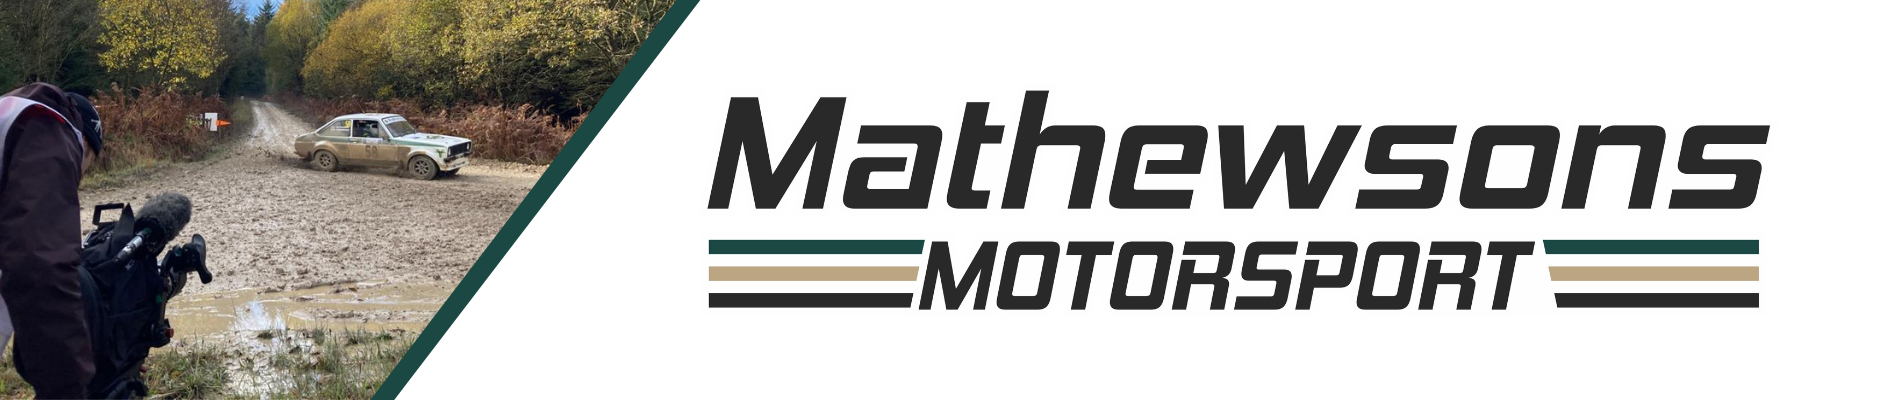 Mathewsons Motorsport confirm Mini Rally Challenge Sponsorship